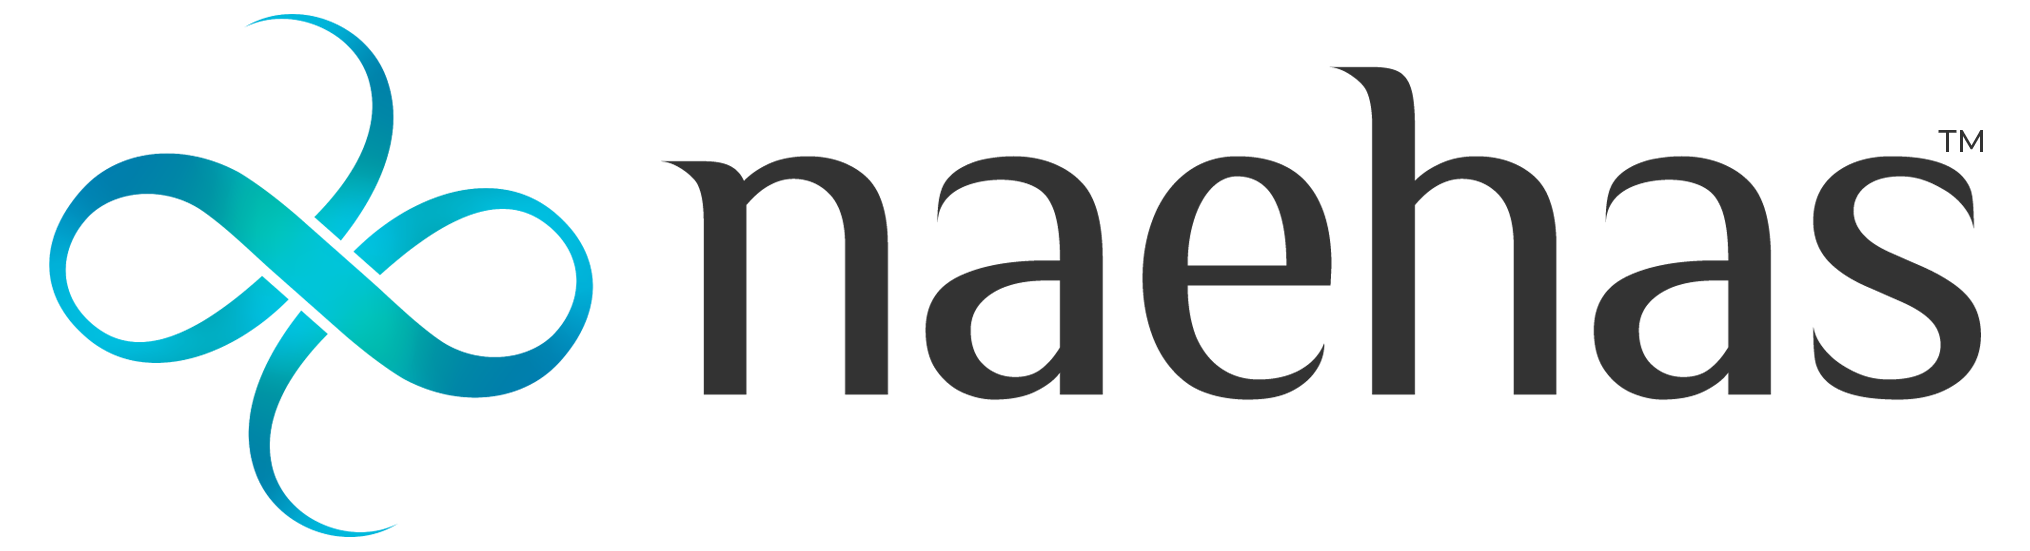 naehas logo